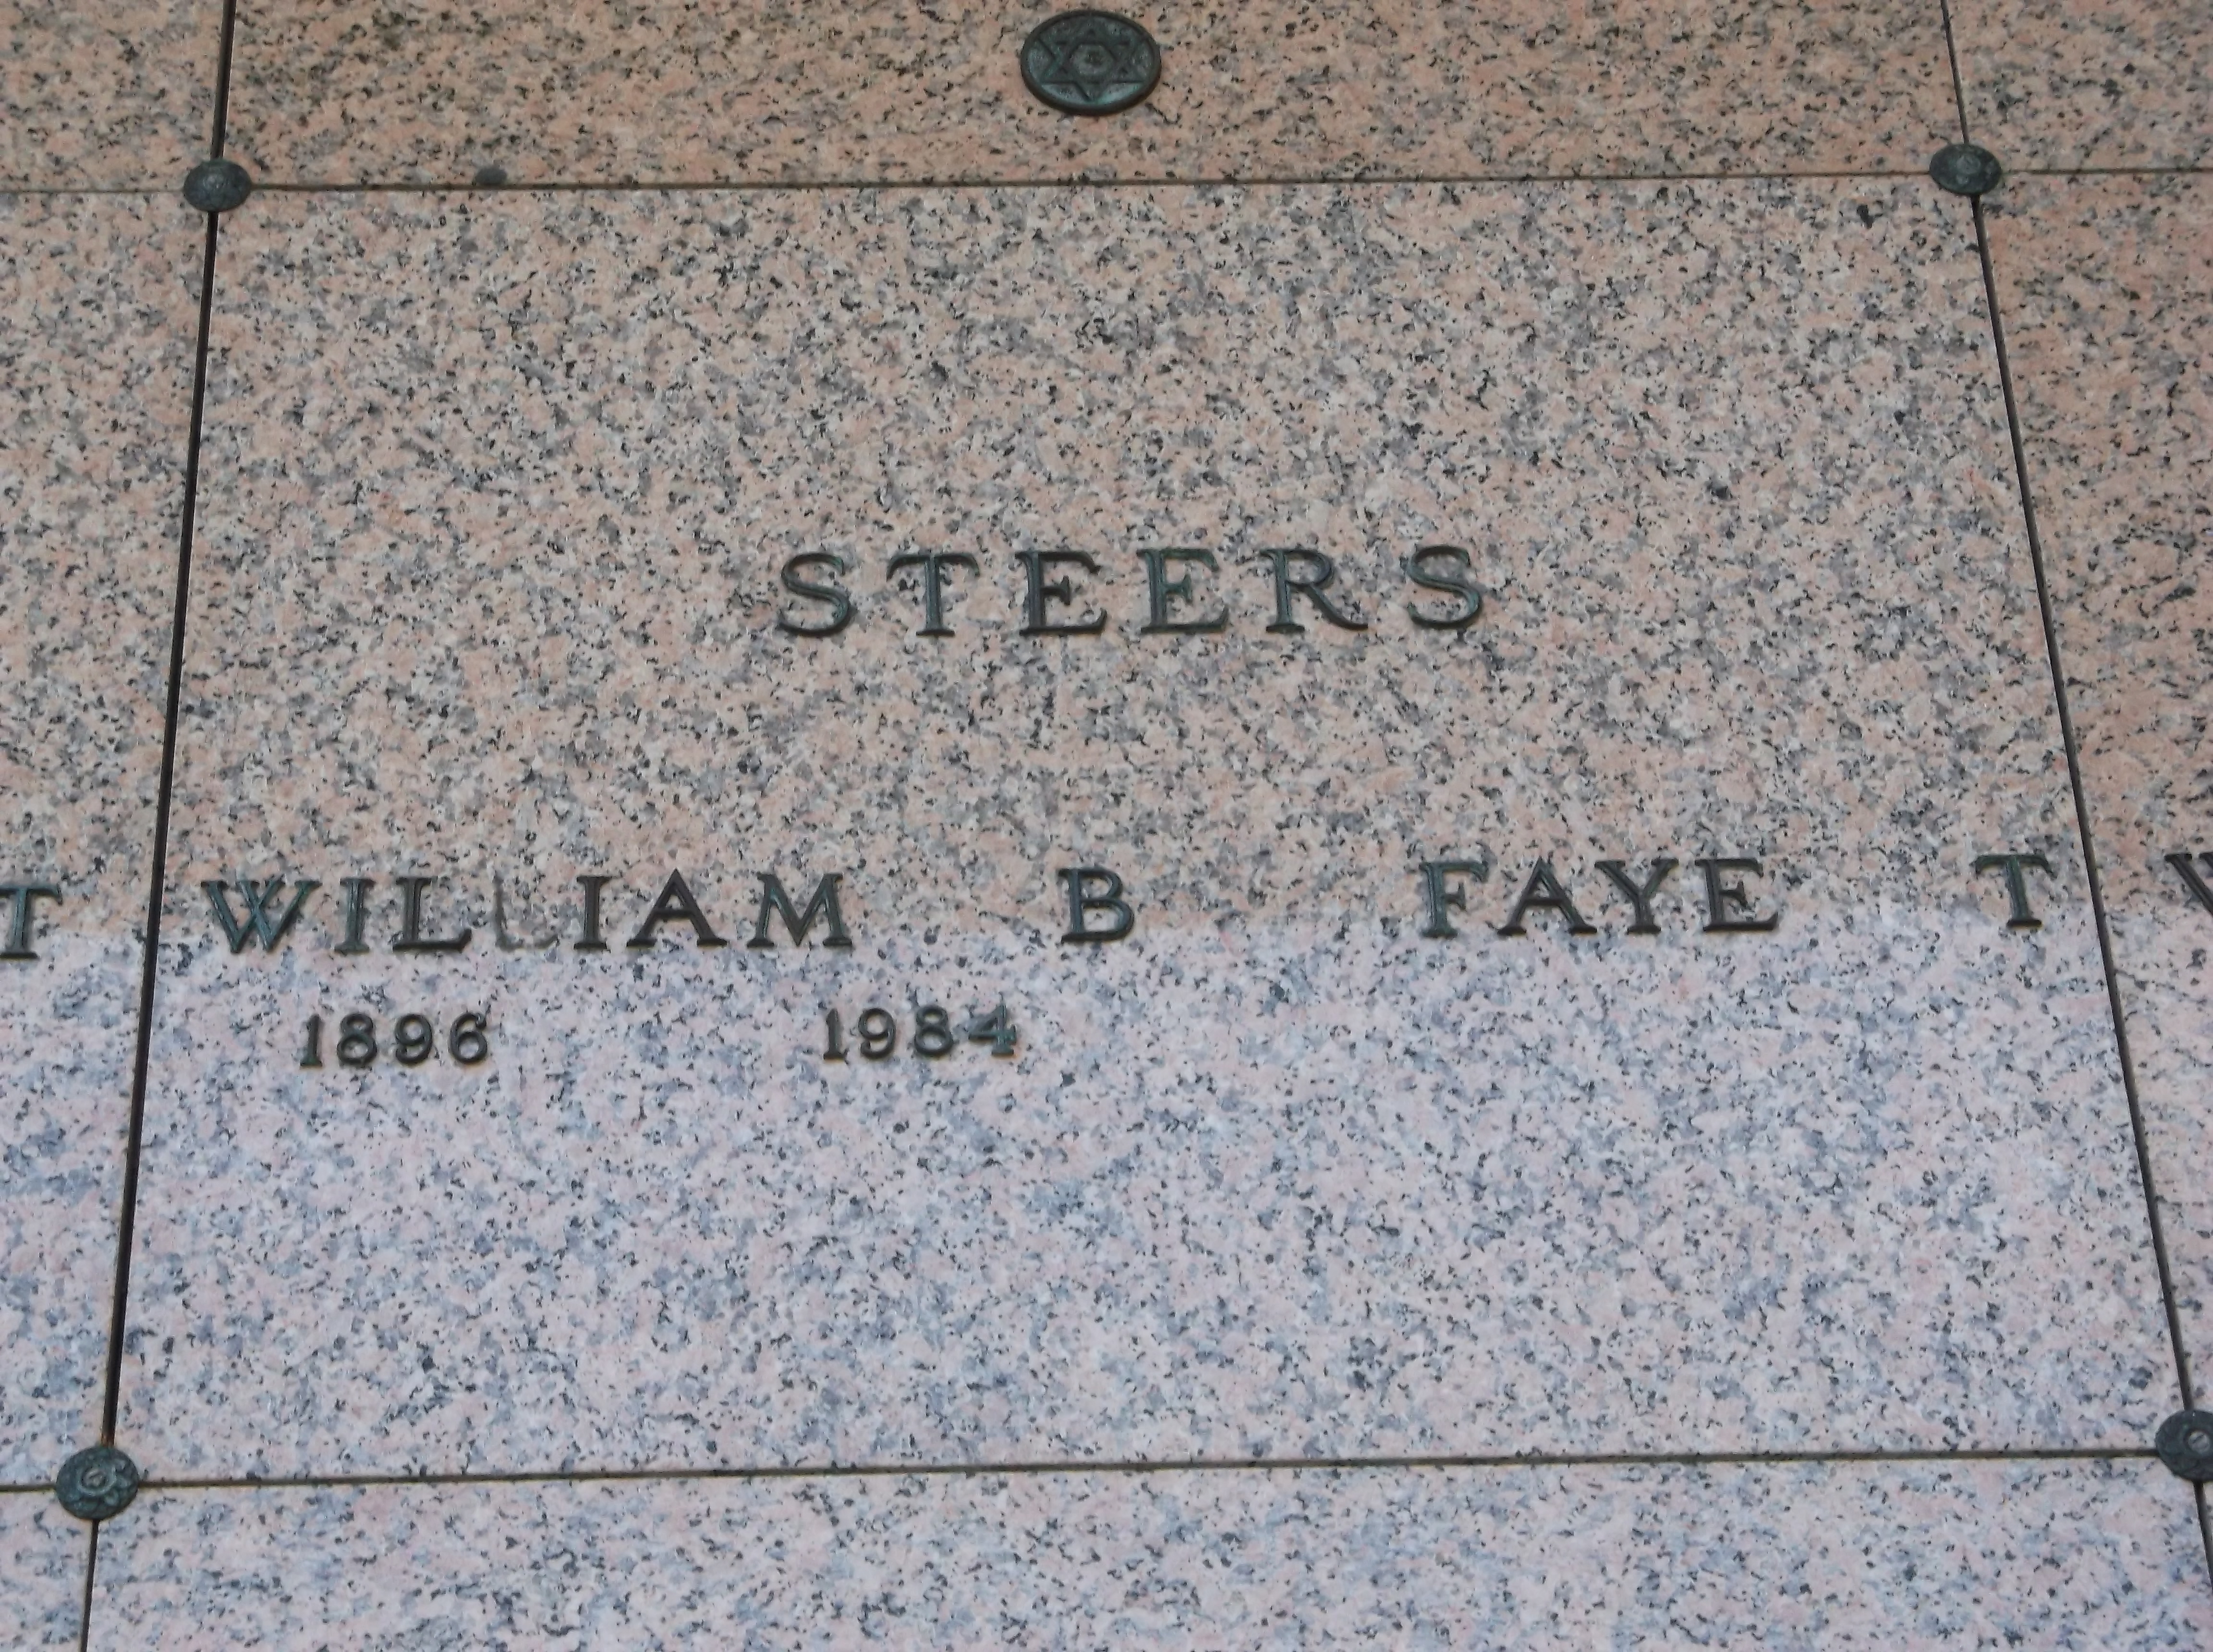 William B Steers